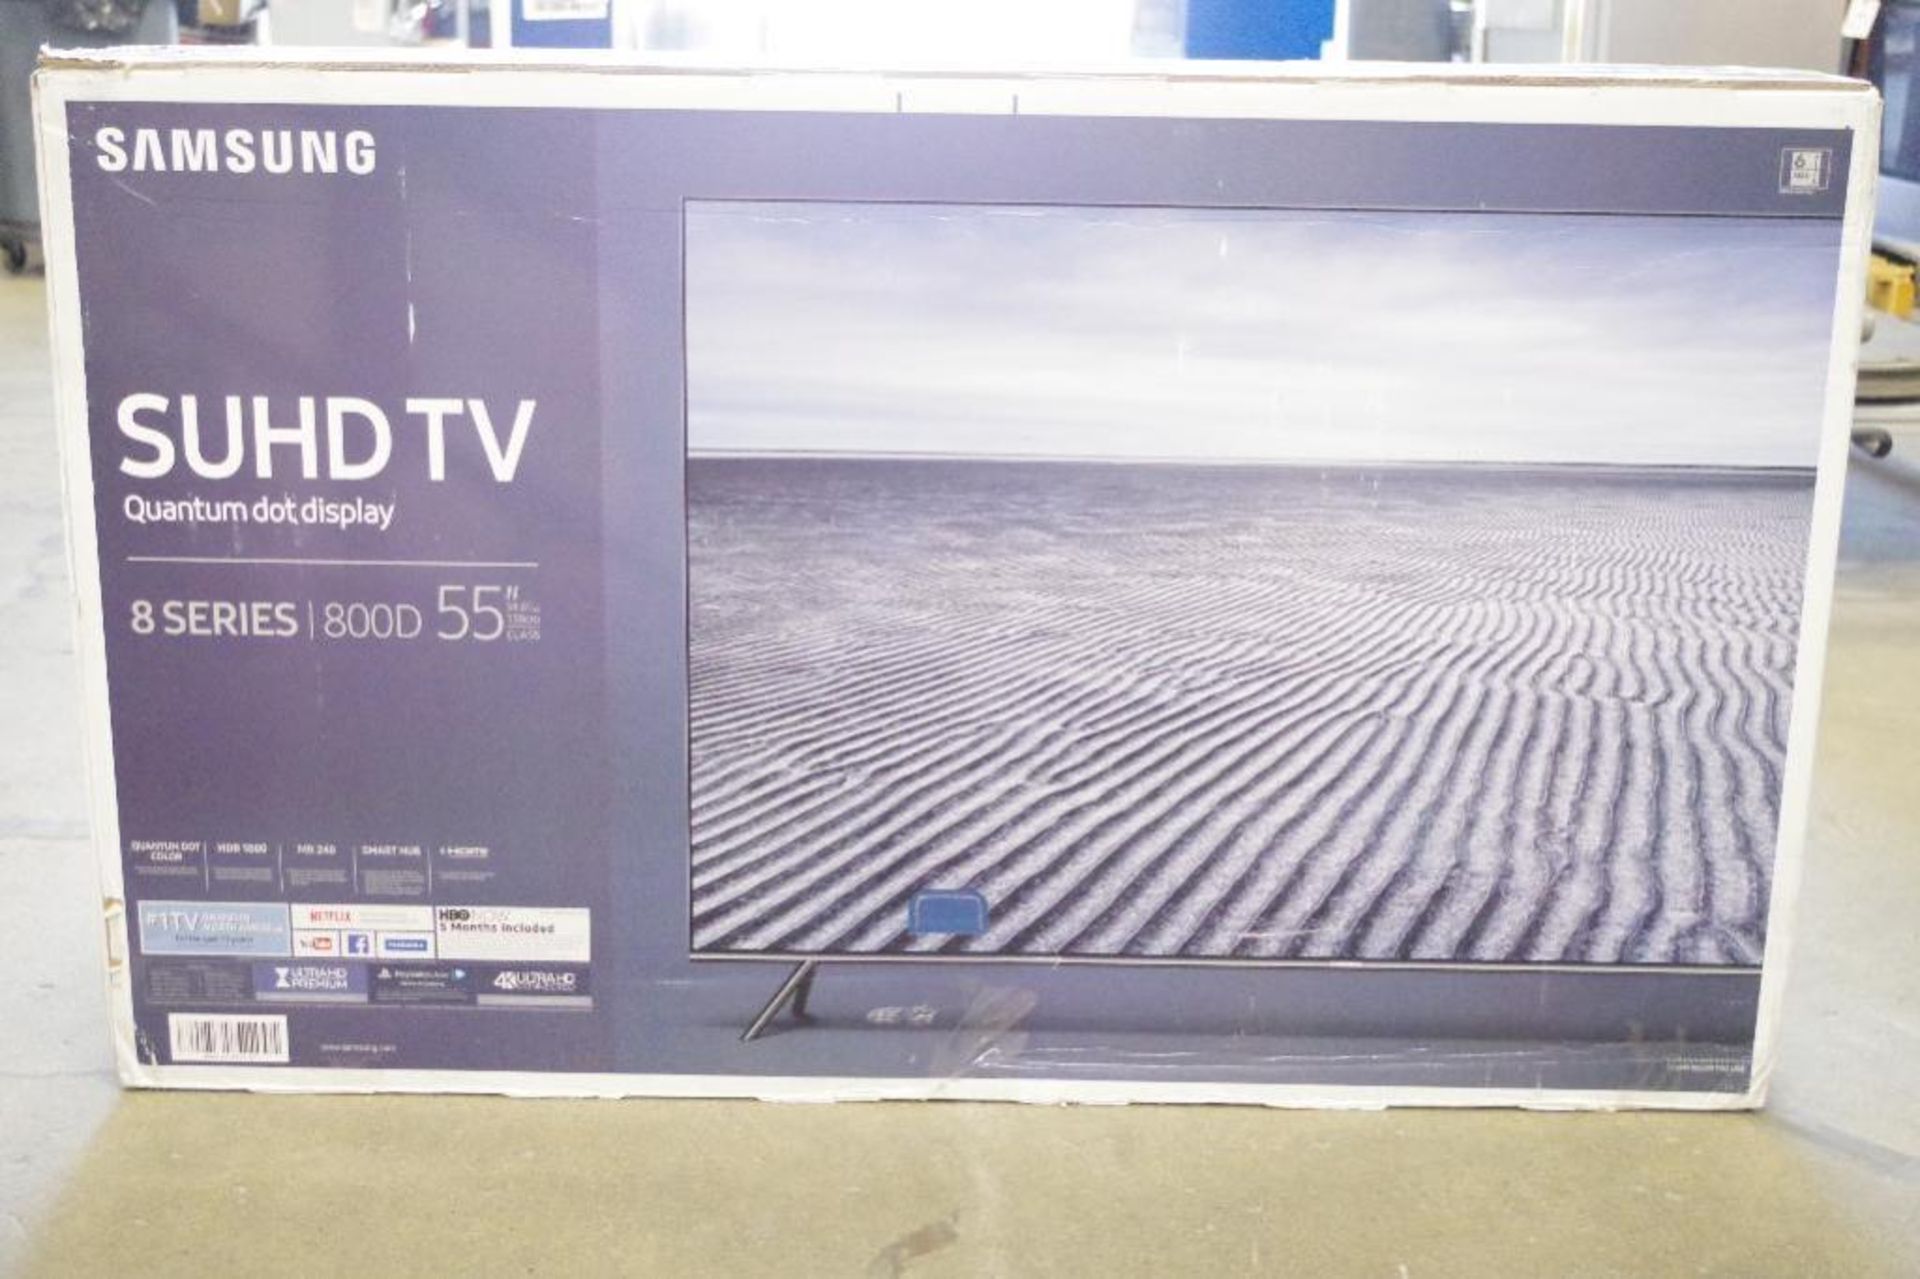 NEW 55" SAMSUNG 4K UHD LED SMART TV 8 Series M/N UN55KS800D ( NEW in sealed box) - Image 7 of 7